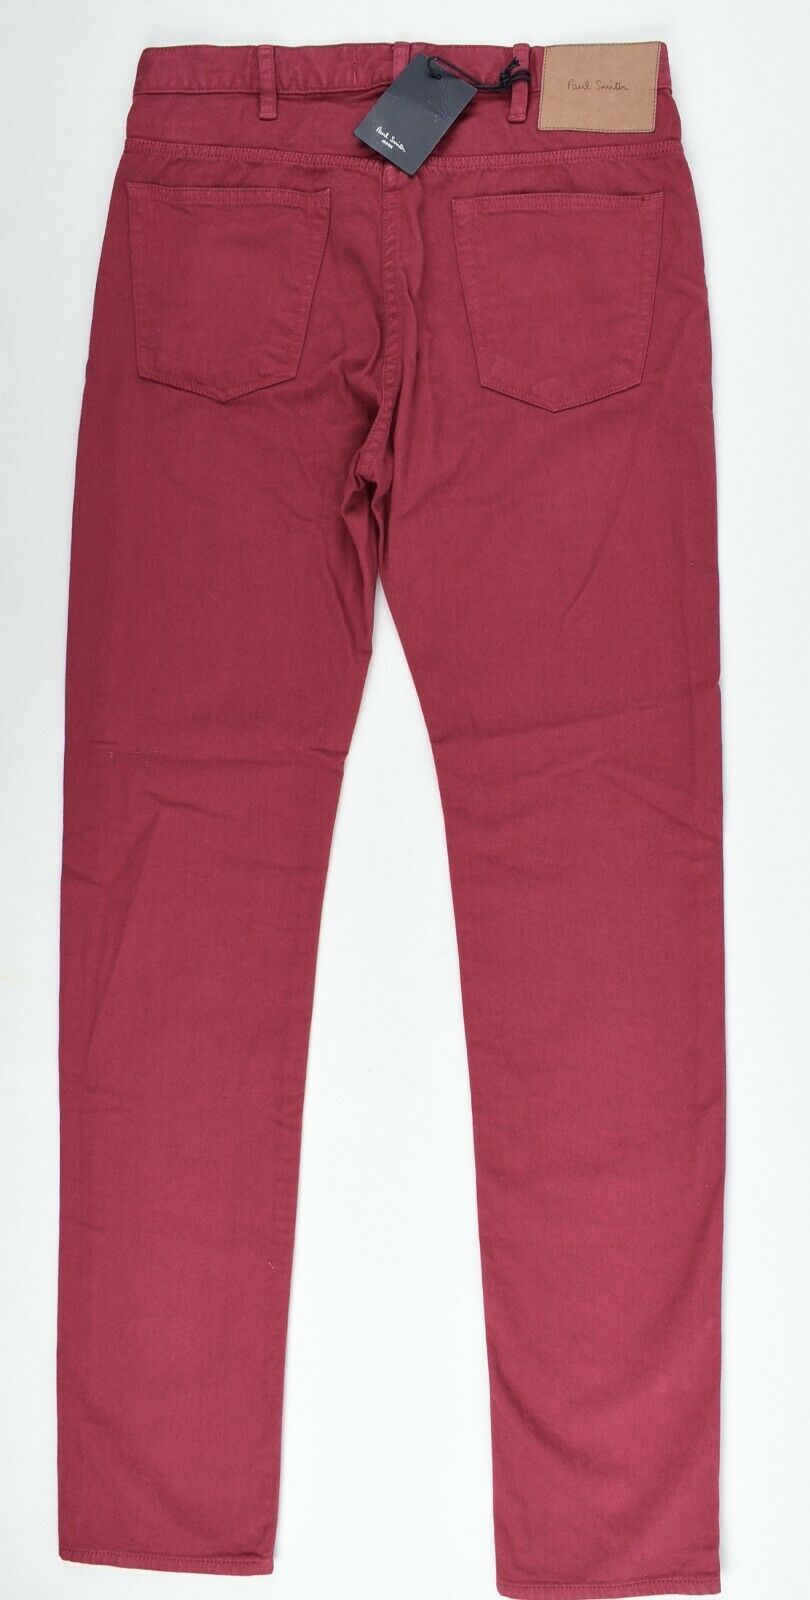 PAUL SMITH Men's Slim Leg Denim Jeans, Burgundy Red, size W29 R